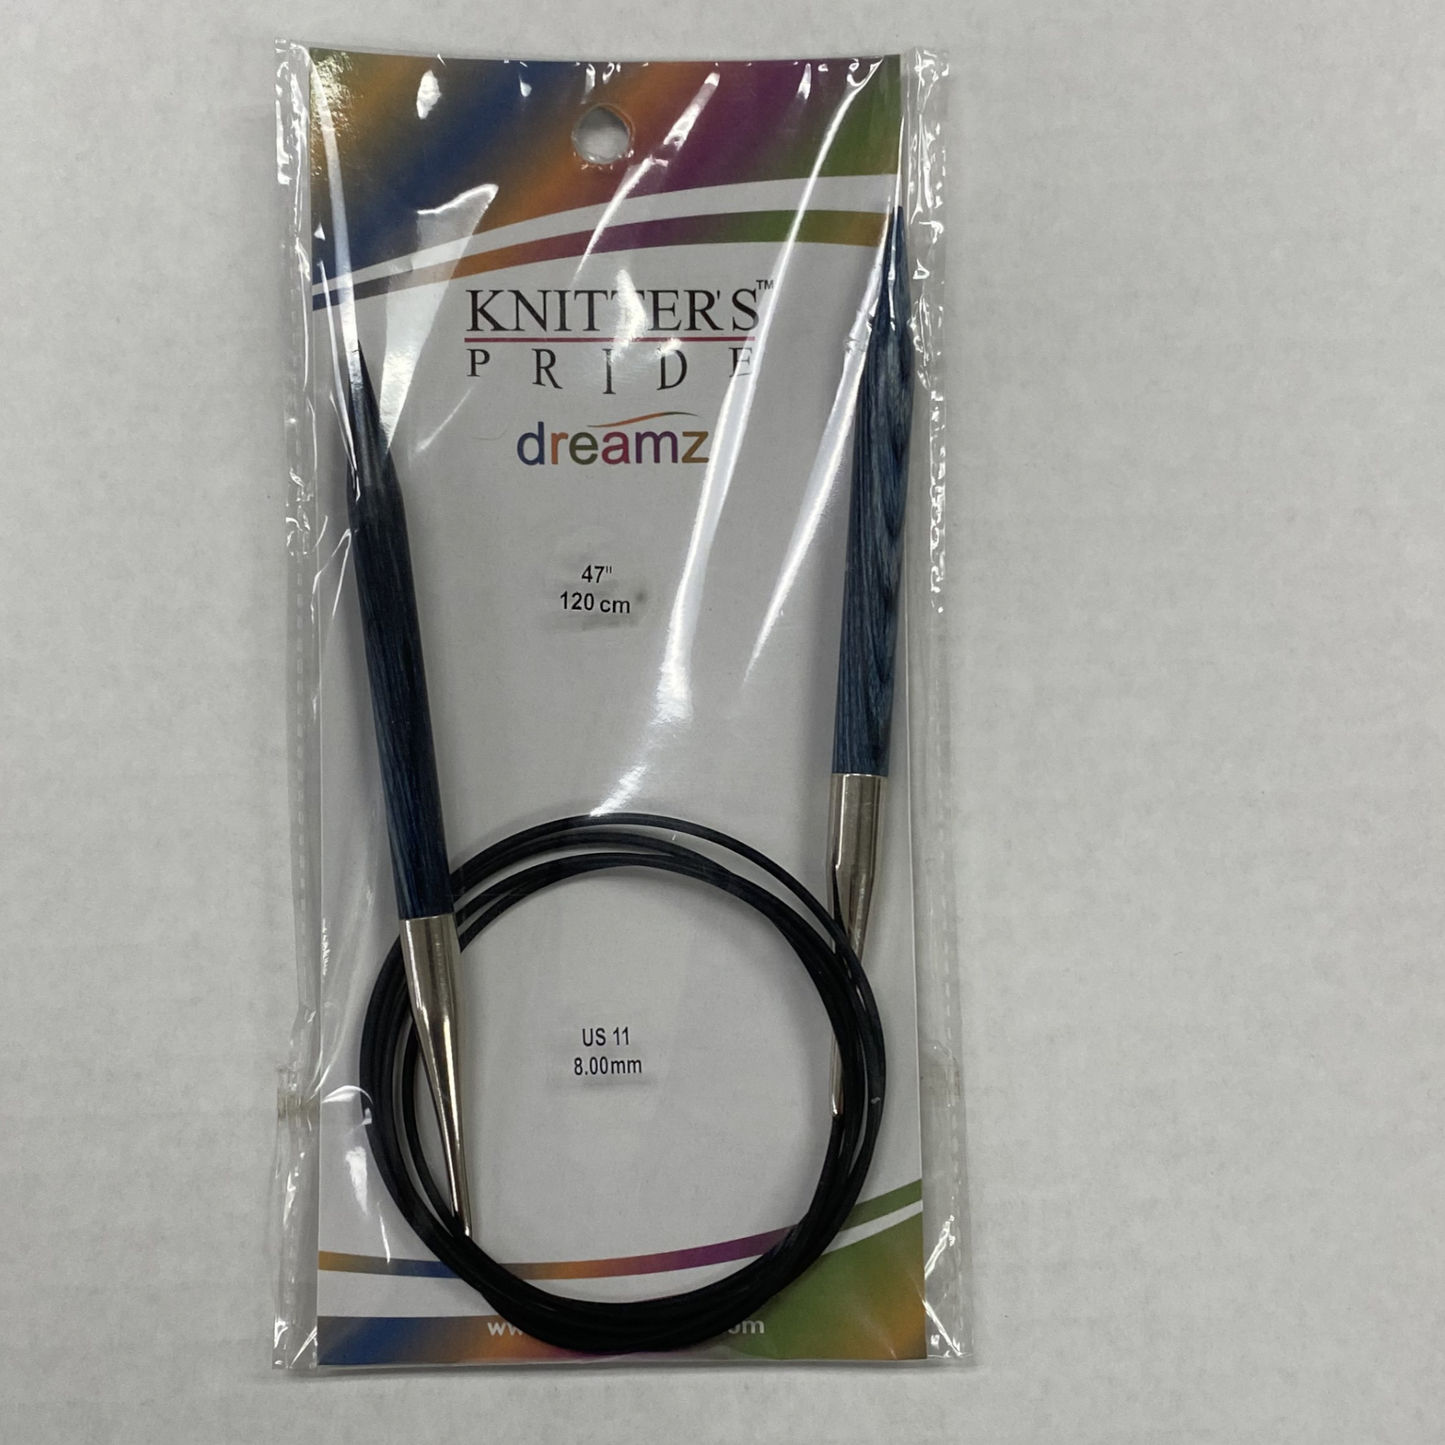 Knitter's Pride - Dreamz - US 11 / 8.00mm Fixed Circular Needles